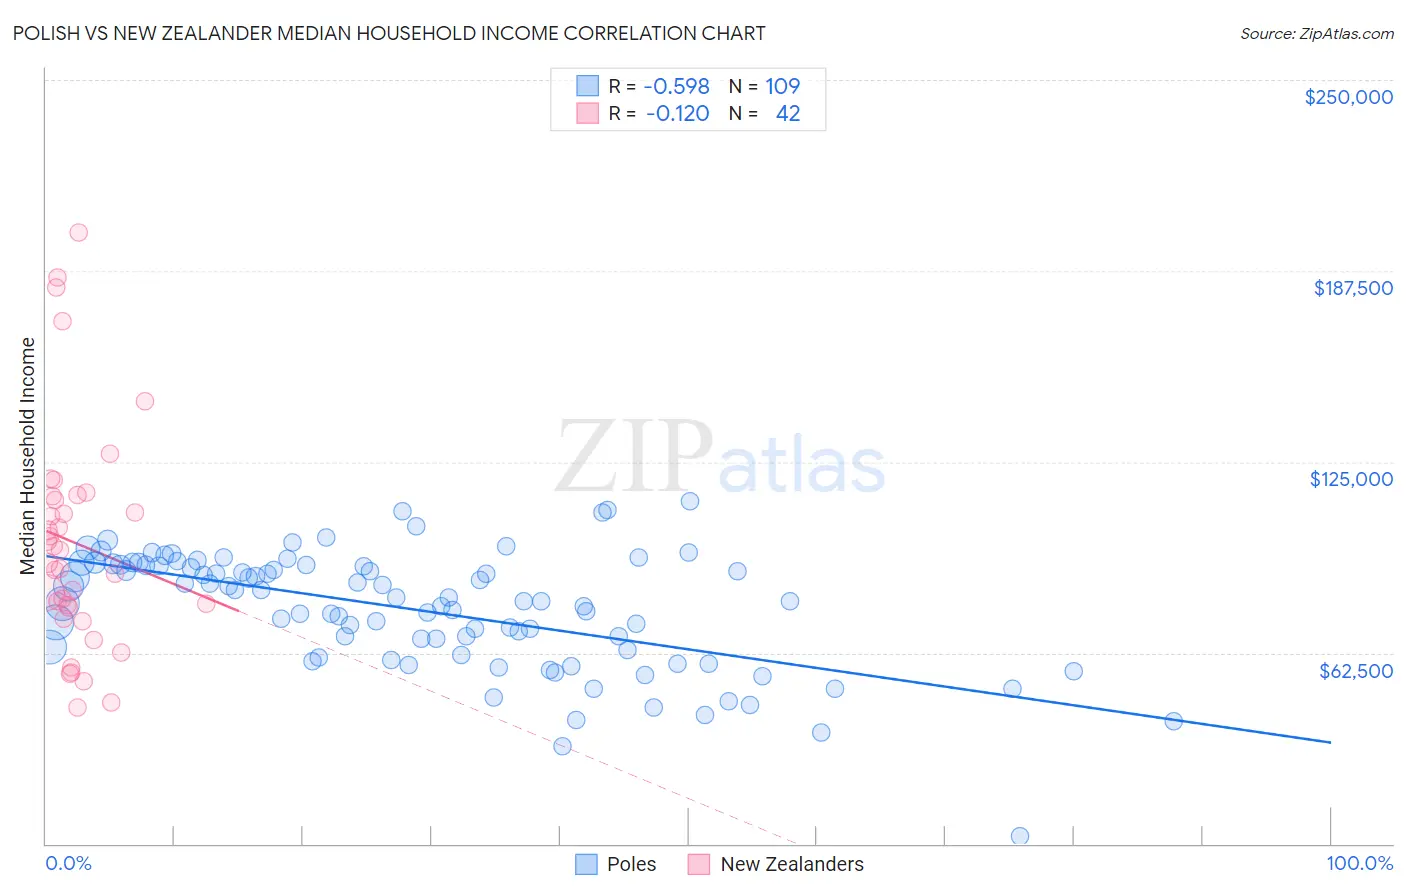 Polish vs New Zealander Median Household Income